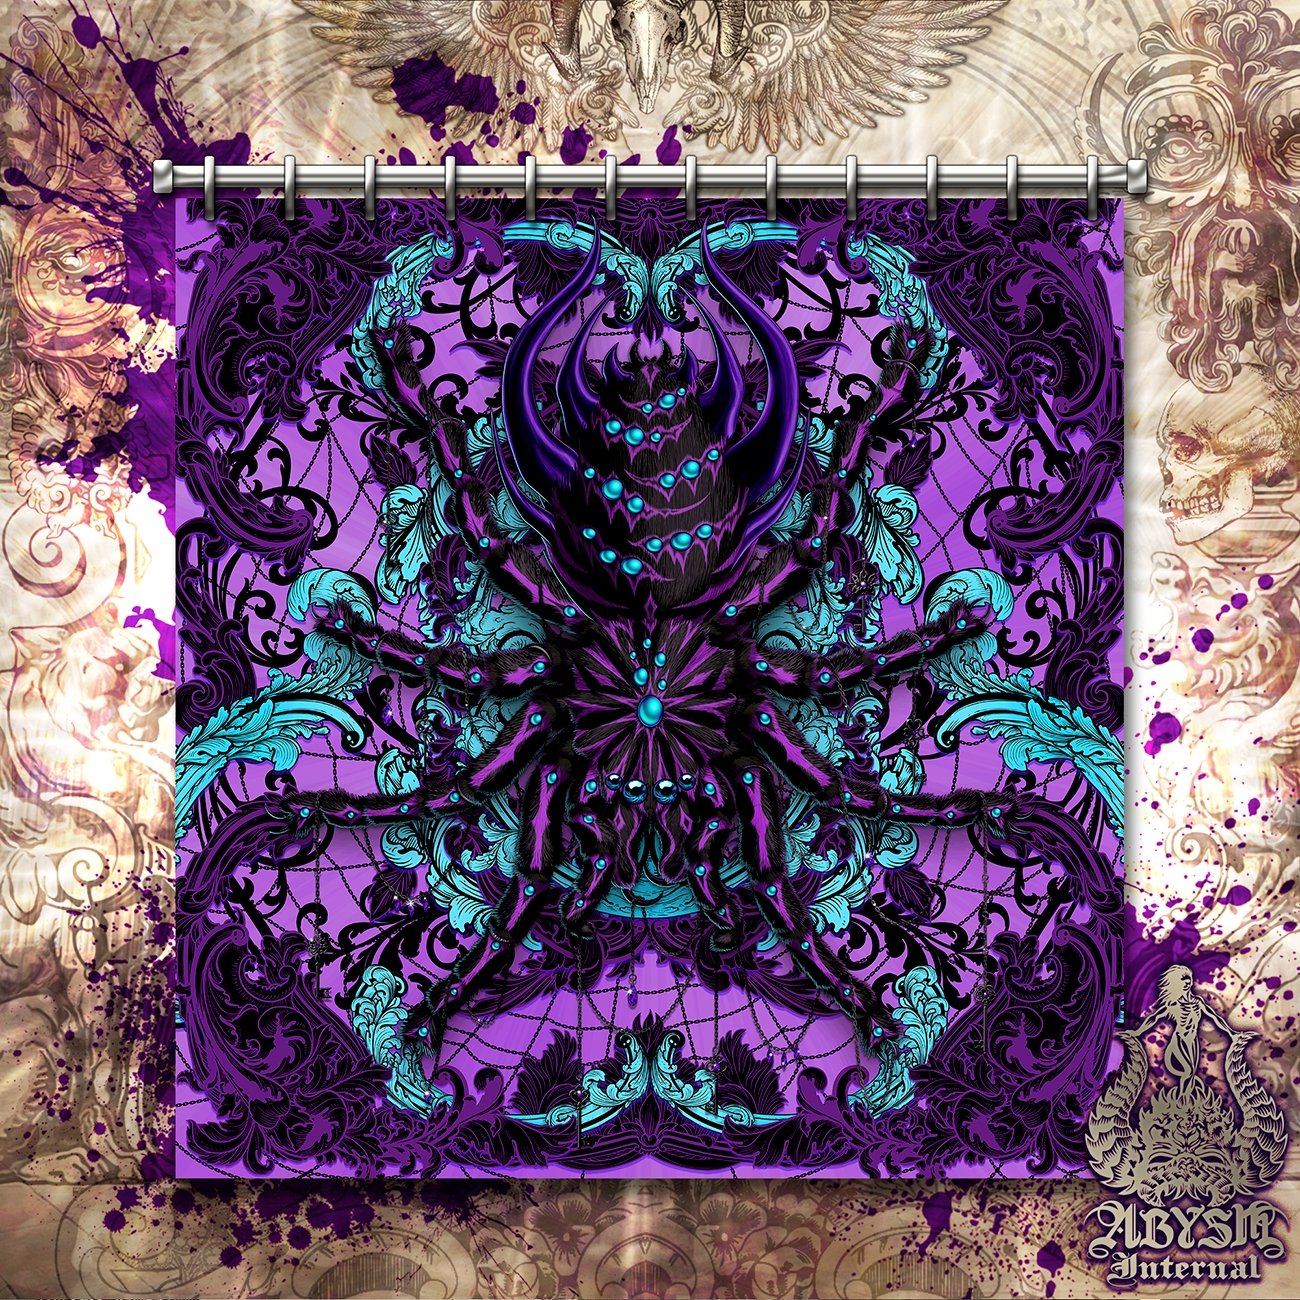 Pastel Goth Shower Curtain, Gothic Bathroom Decor, Alternative Home - Spider Black and Purple, Tarantula Art - Abysm Internal